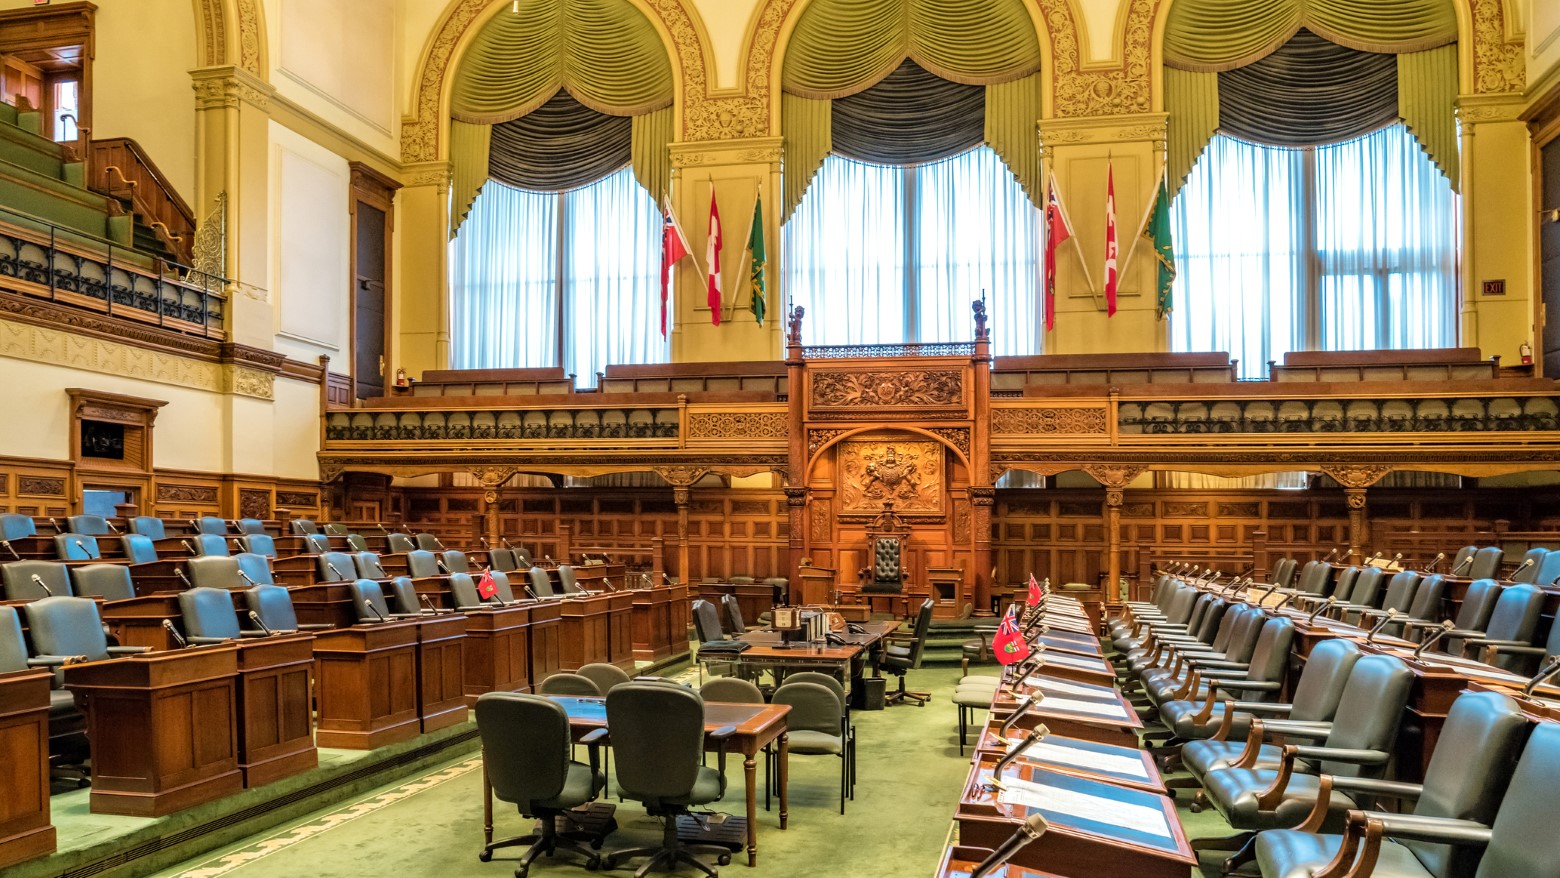 Inside the Ontario Legislative Building